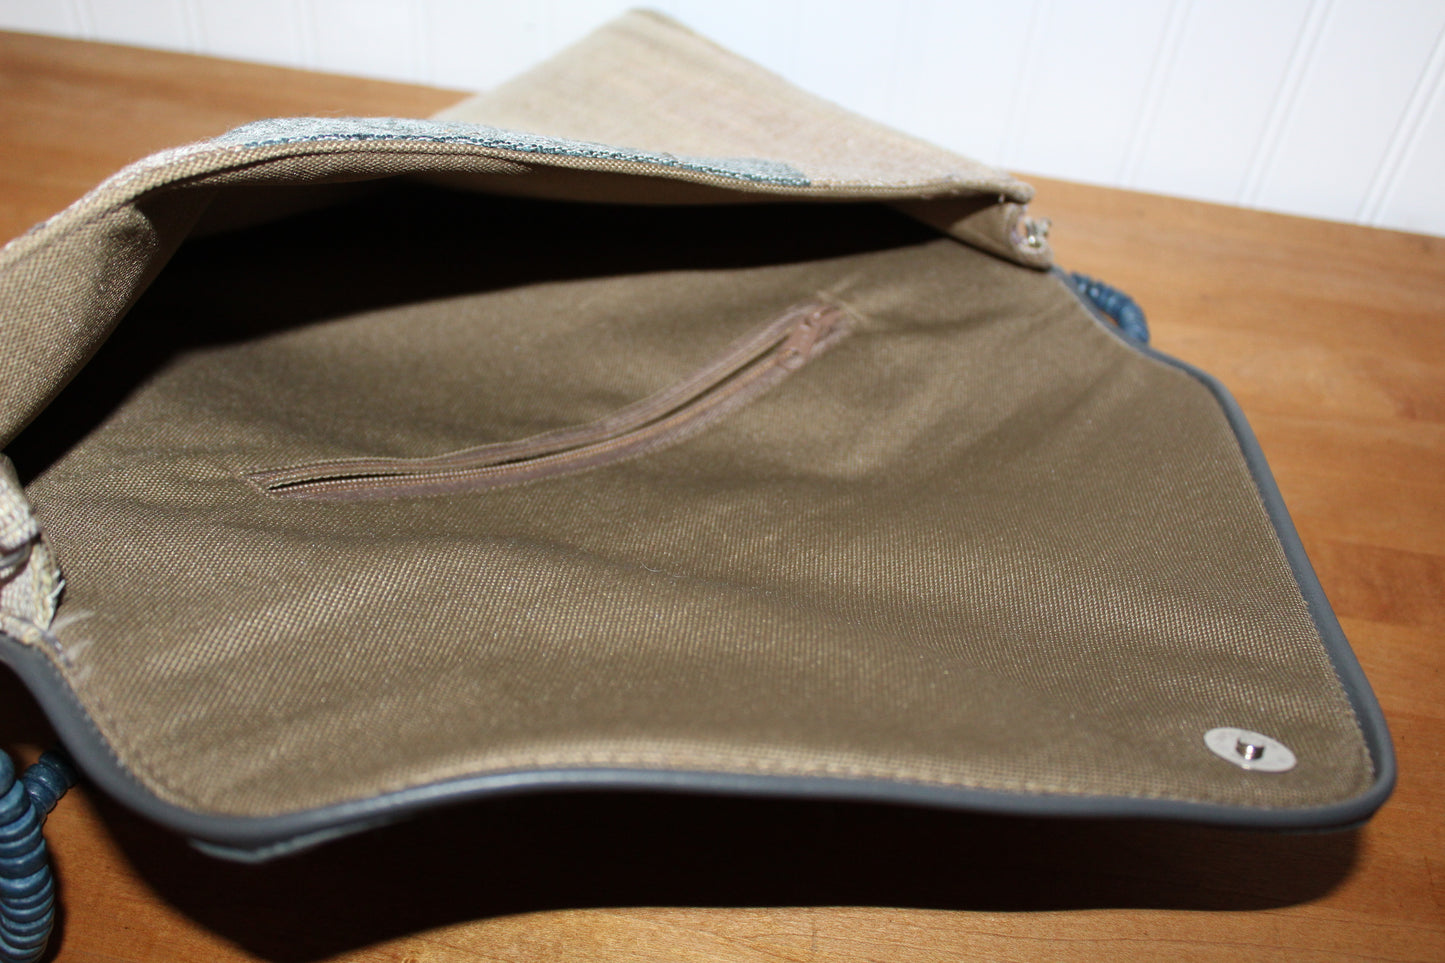 Unused Envelope Handbag - Heavy Woven Ombre Fabric Smoke Blues Purples Beige great colors stylish